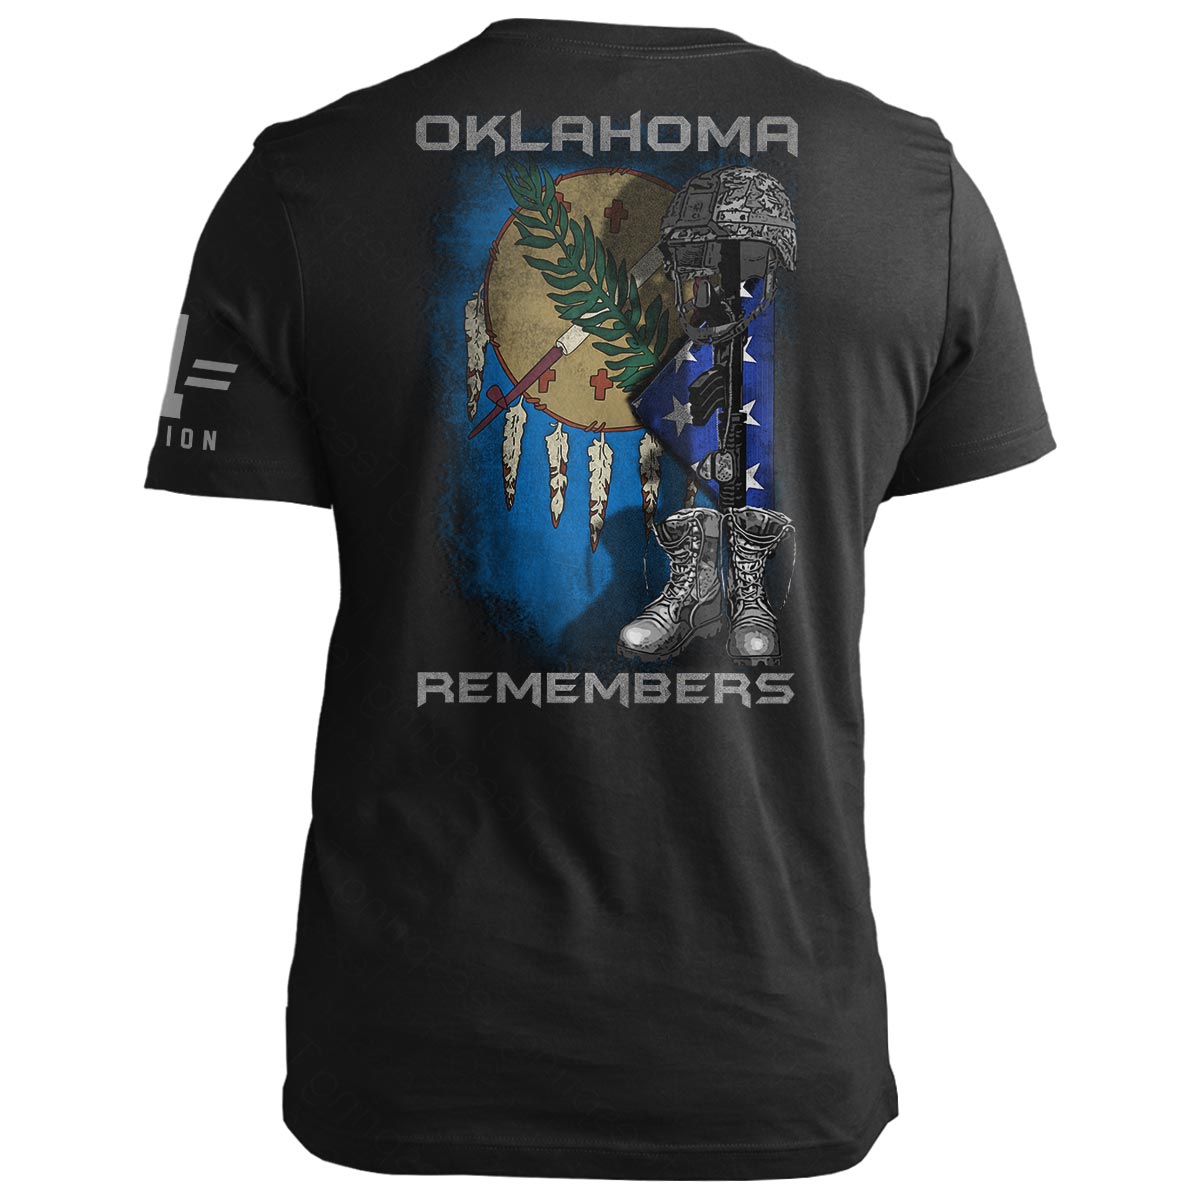 Oklahoma Remembers